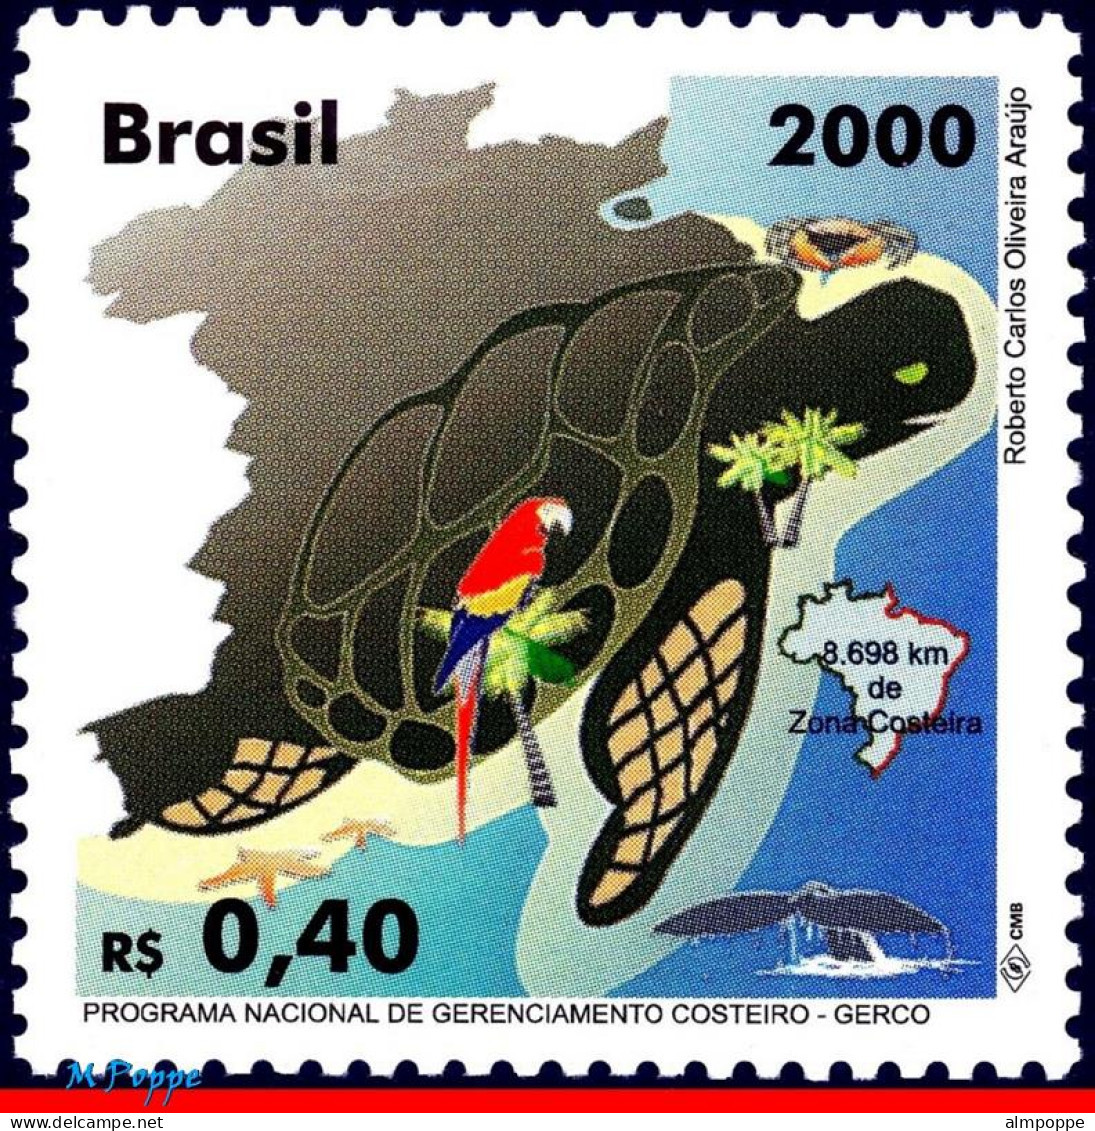 Ref. BR-2742 BRAZIL 2000 - GERCO, COASTAL ZONE,PARROT, TURTLE, WHALE, MI# 3028, MNH, MAPS 1V Sc# 2742 - Ongebruikt